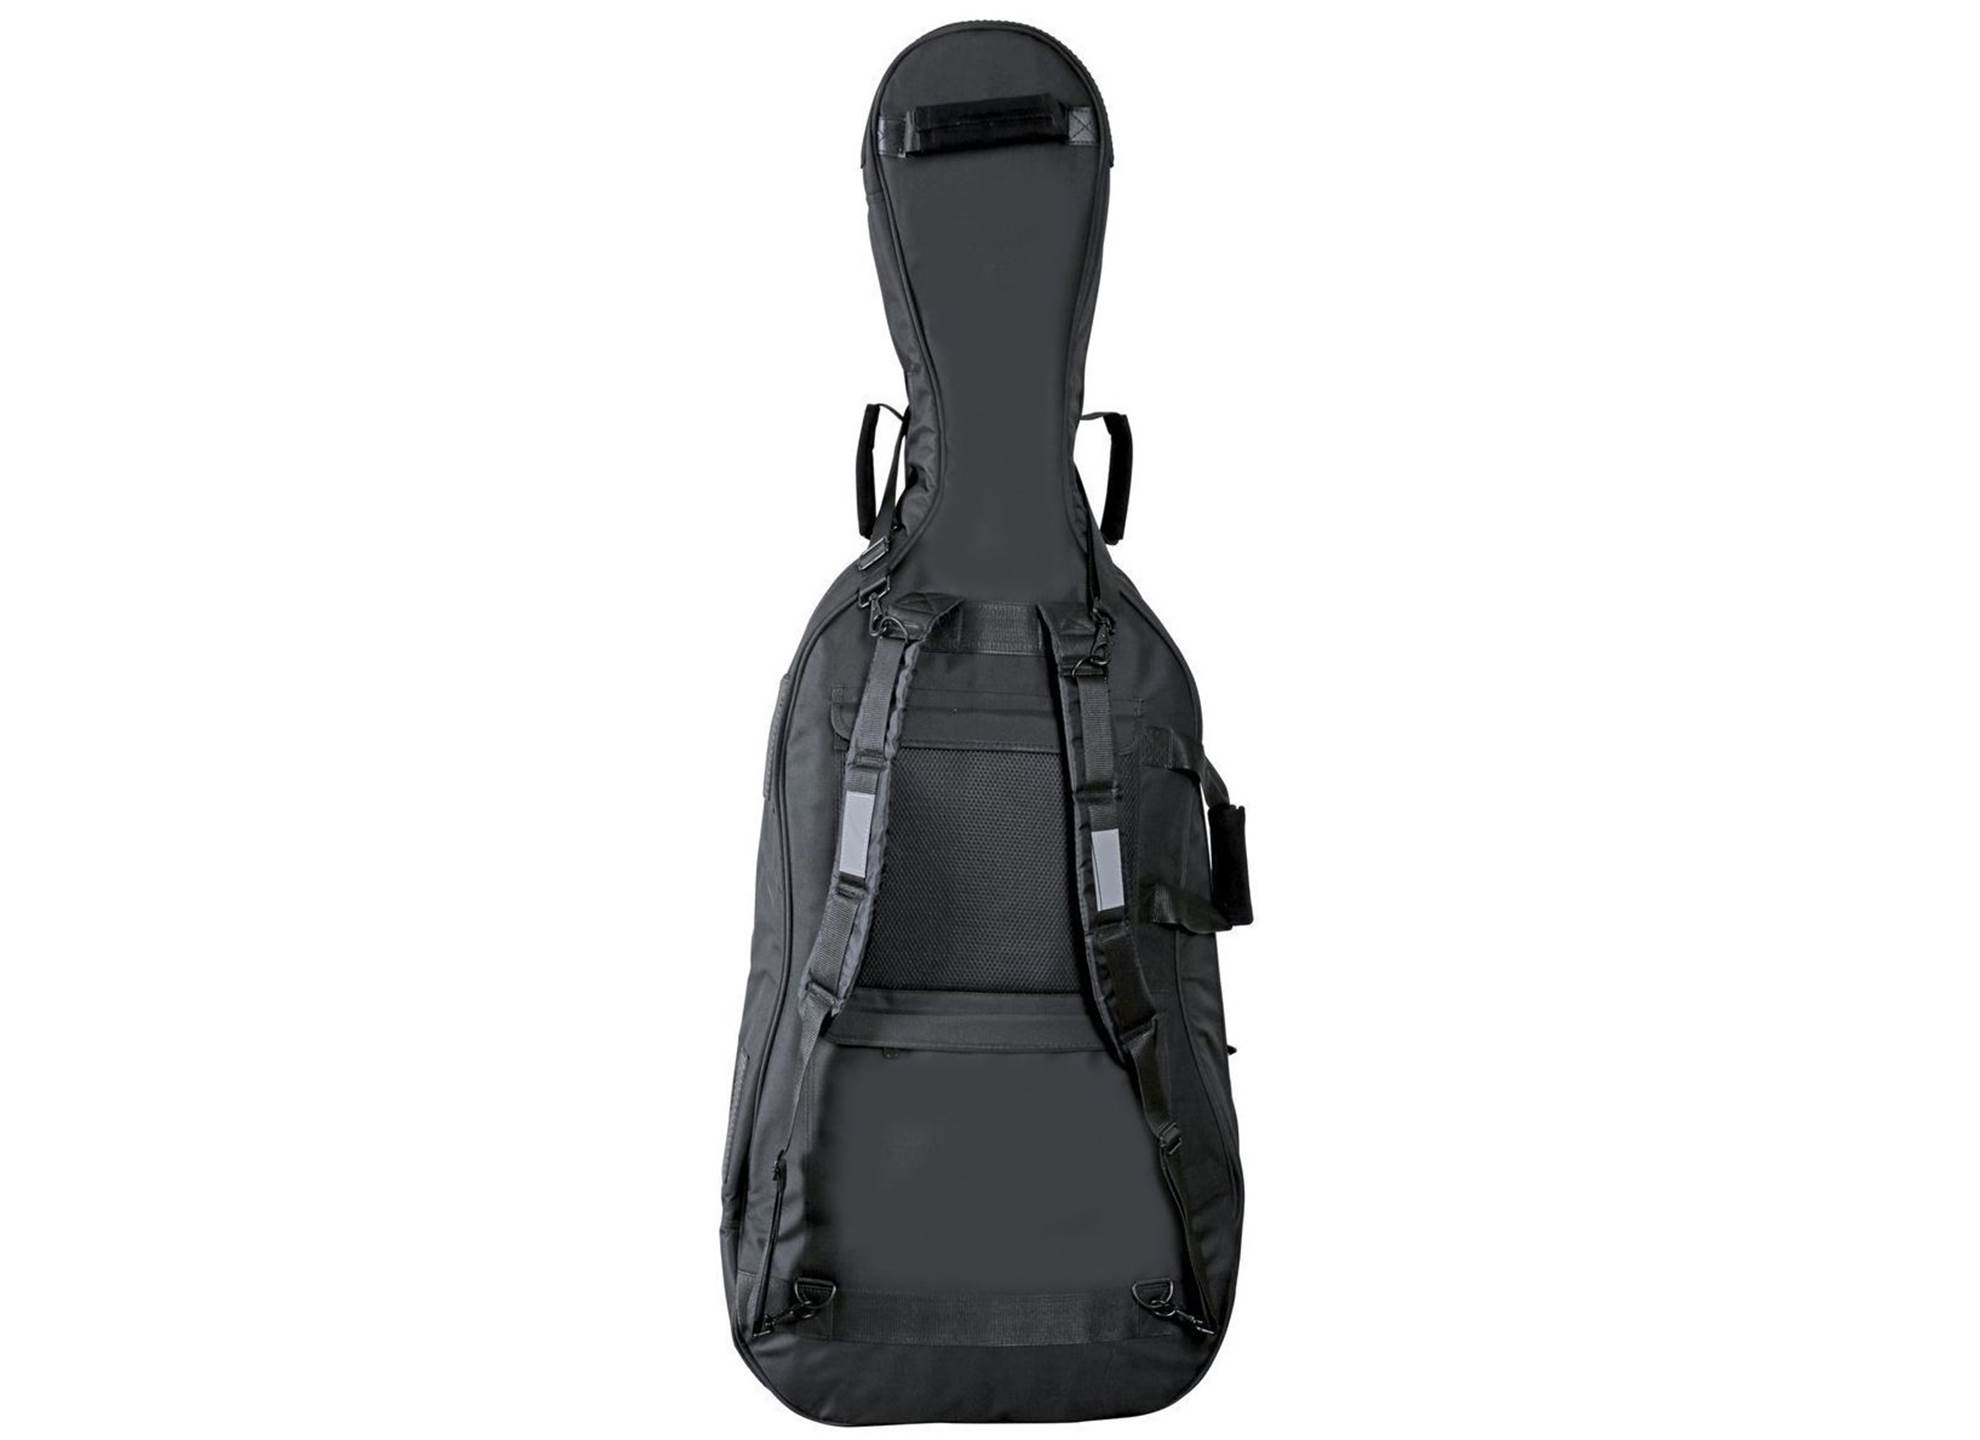 Cello Gig-Bag Premium 1/4